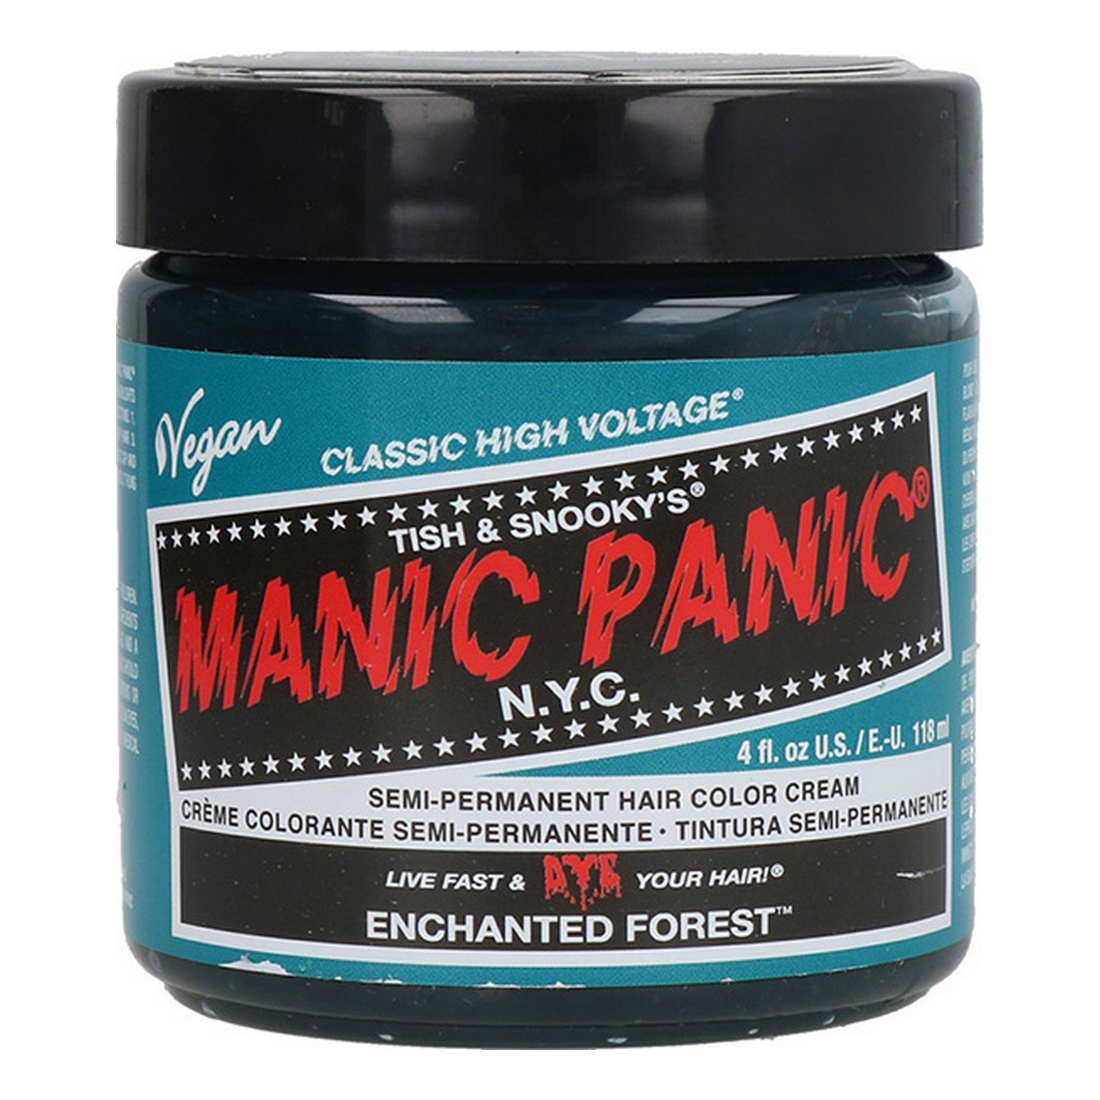 Manic panic virgin snow краска для волос